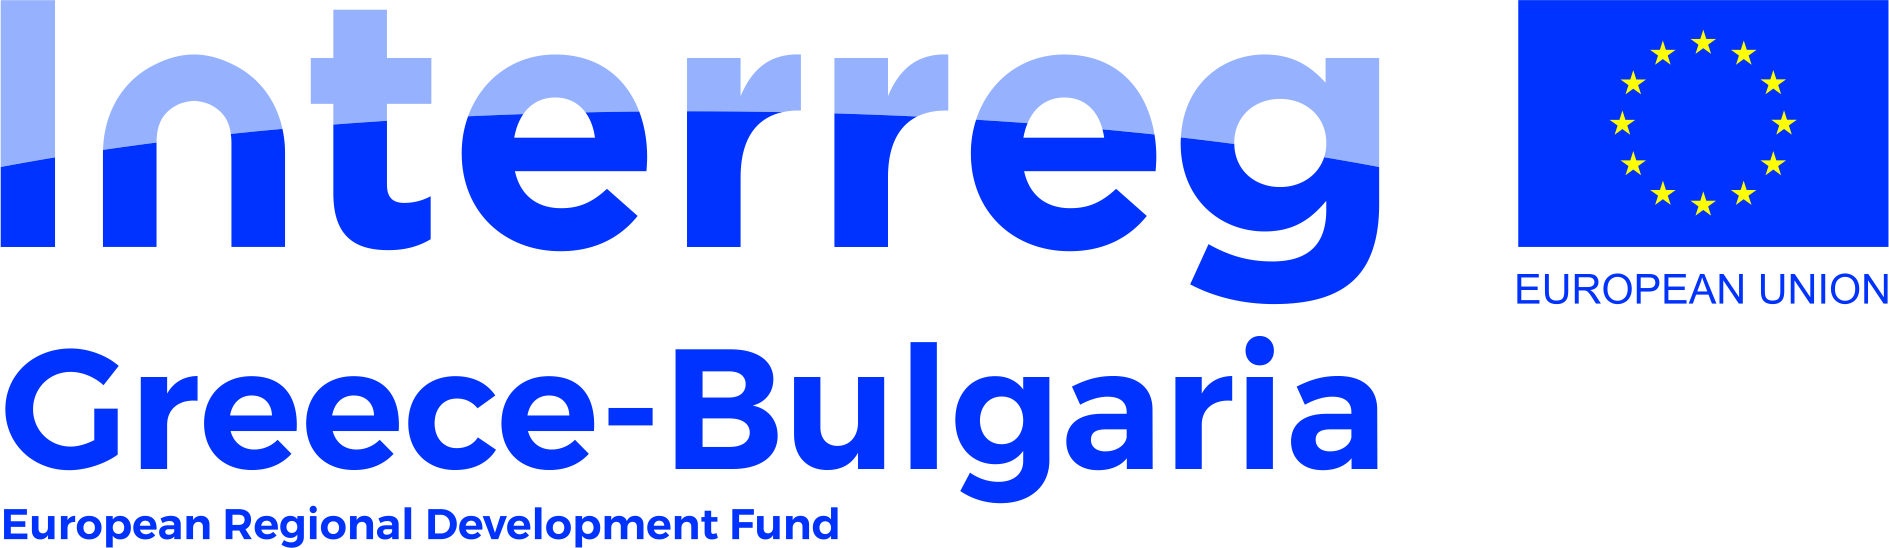 Link to Interreg (http://www.greece-bulgaria.eu/)